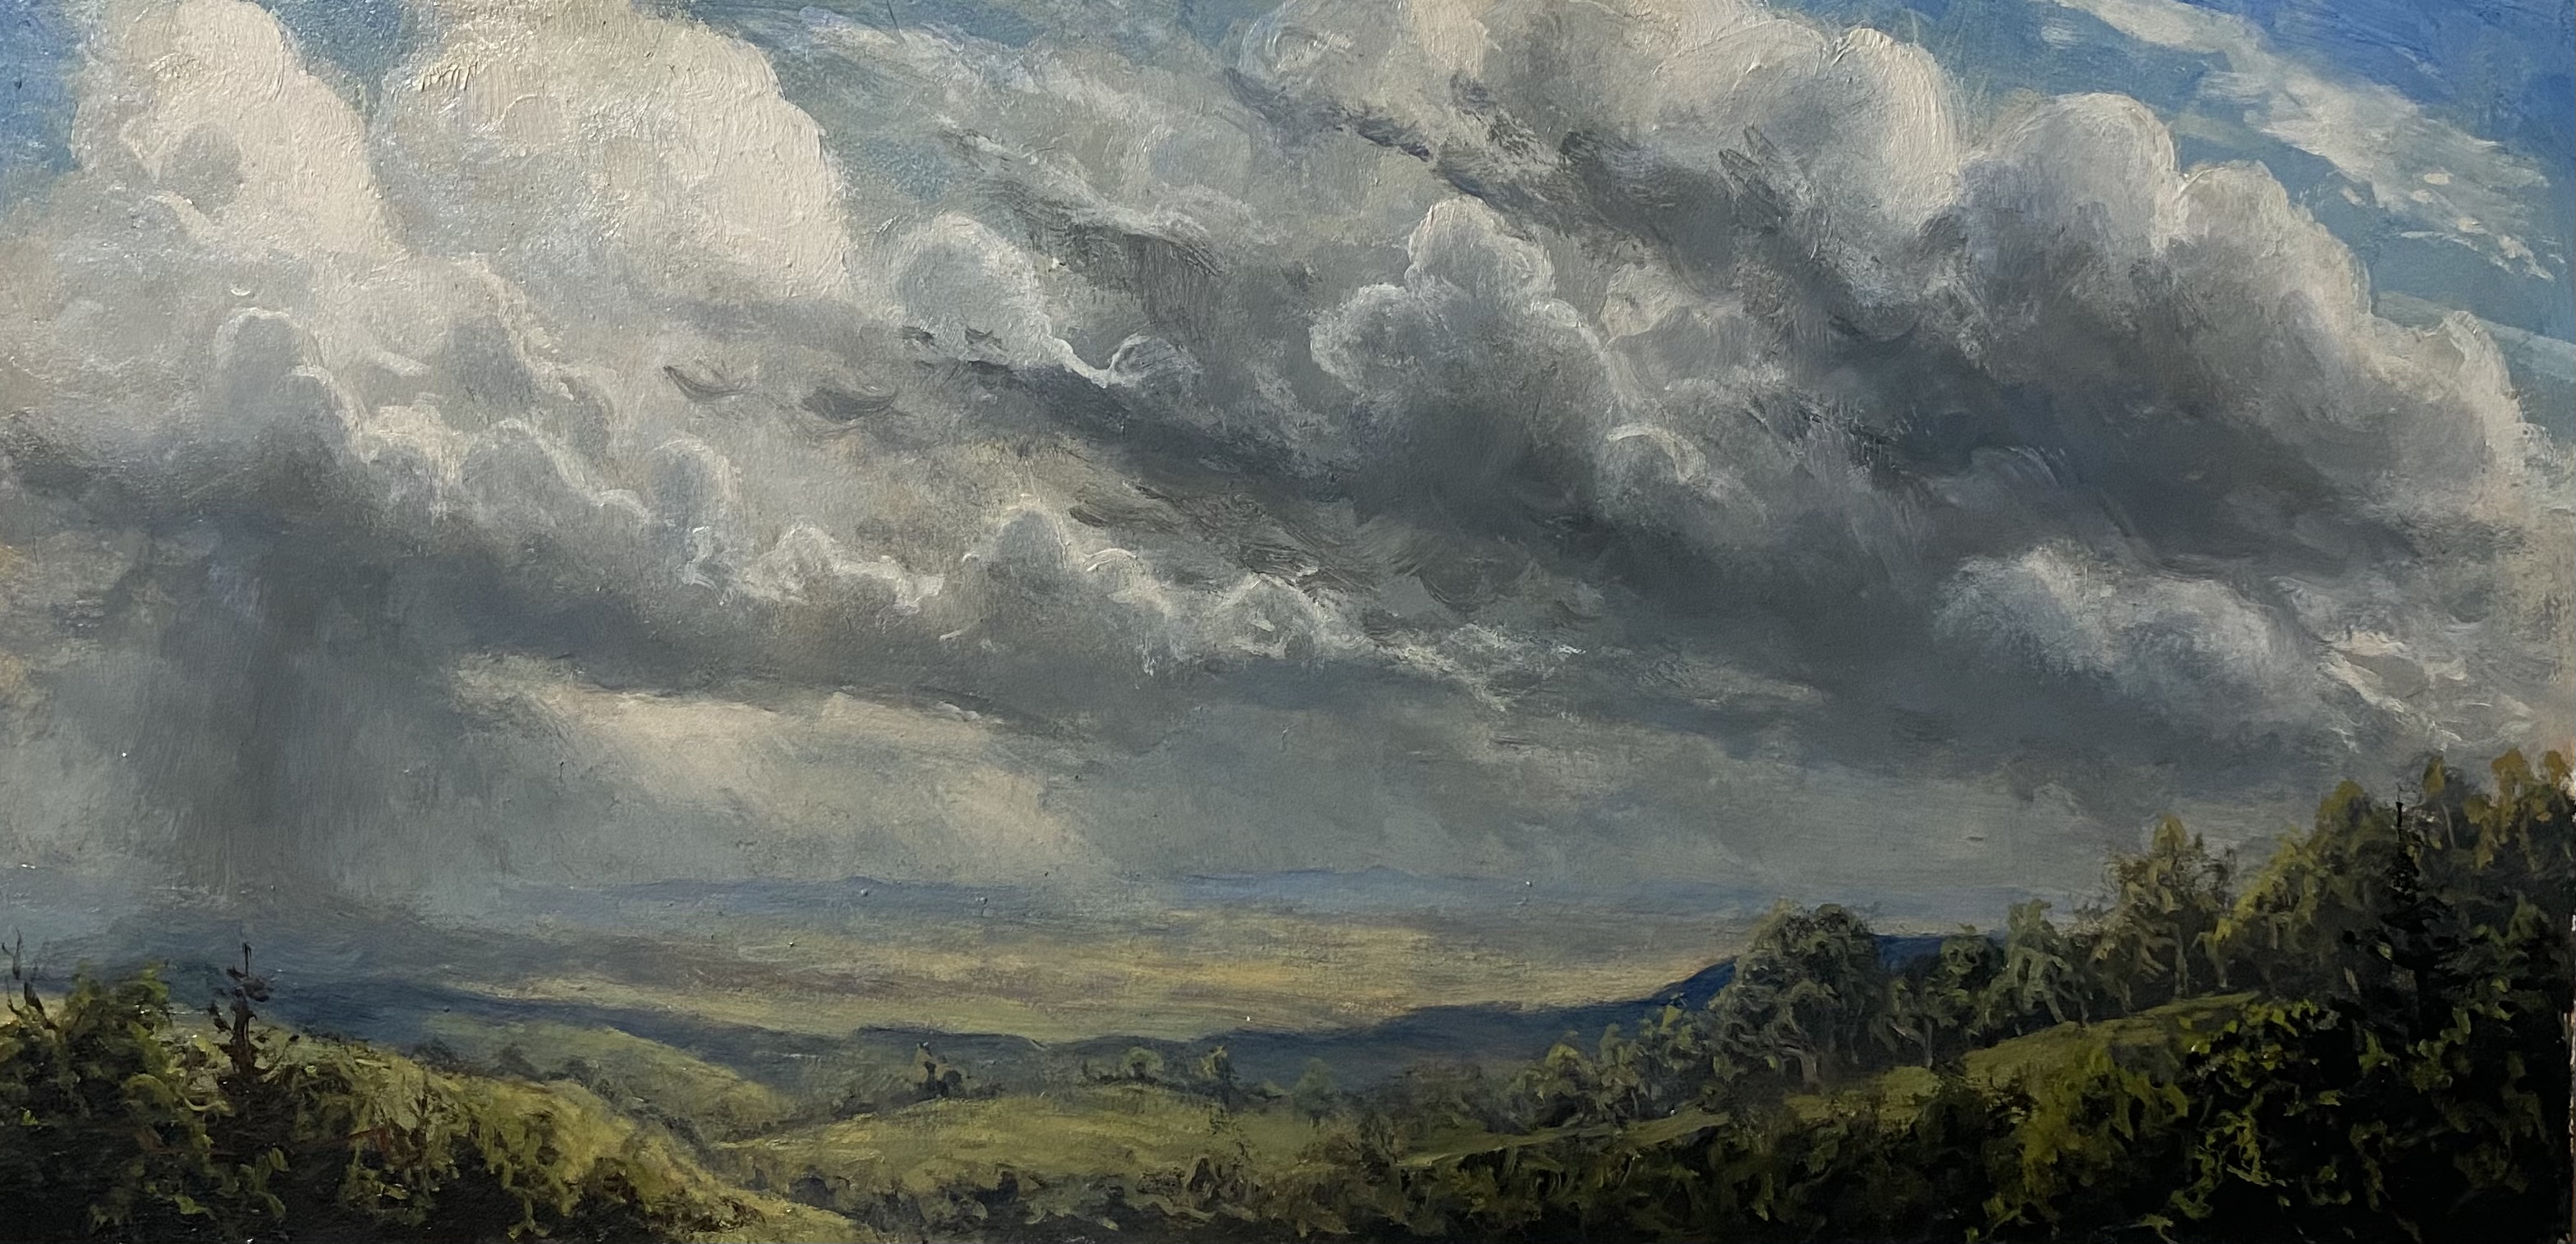 Storm over Dalby by Zac Moynihan  | Lethbridge Landscape Prize 2021 Finalists | Lethbridge Gallery